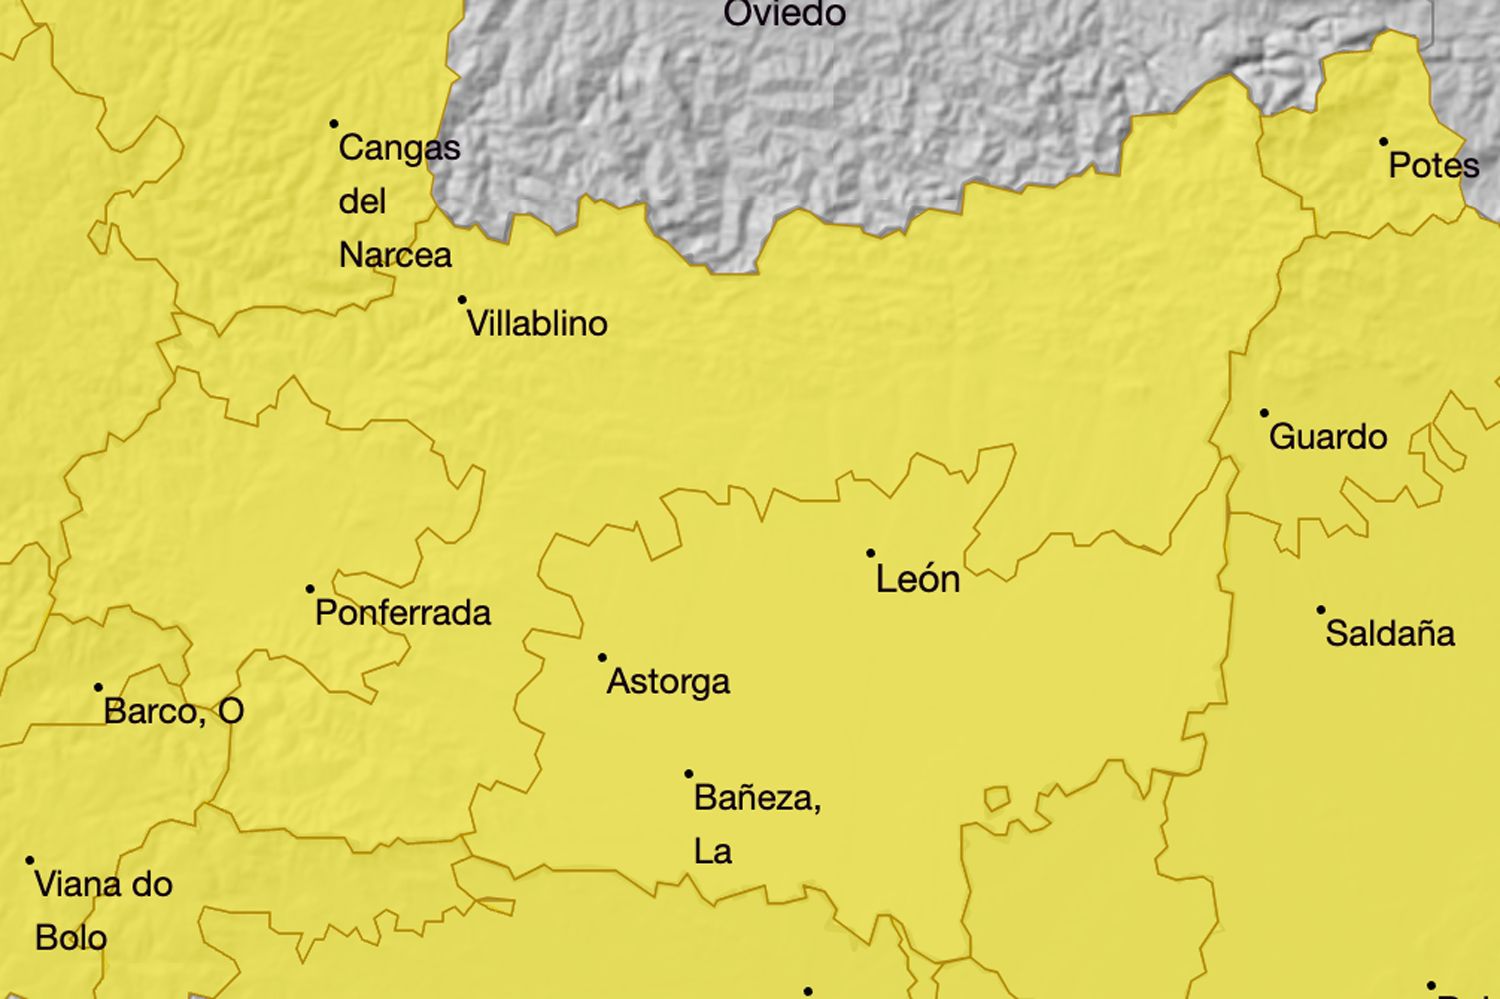 Avisos Aemet en la provincia de León